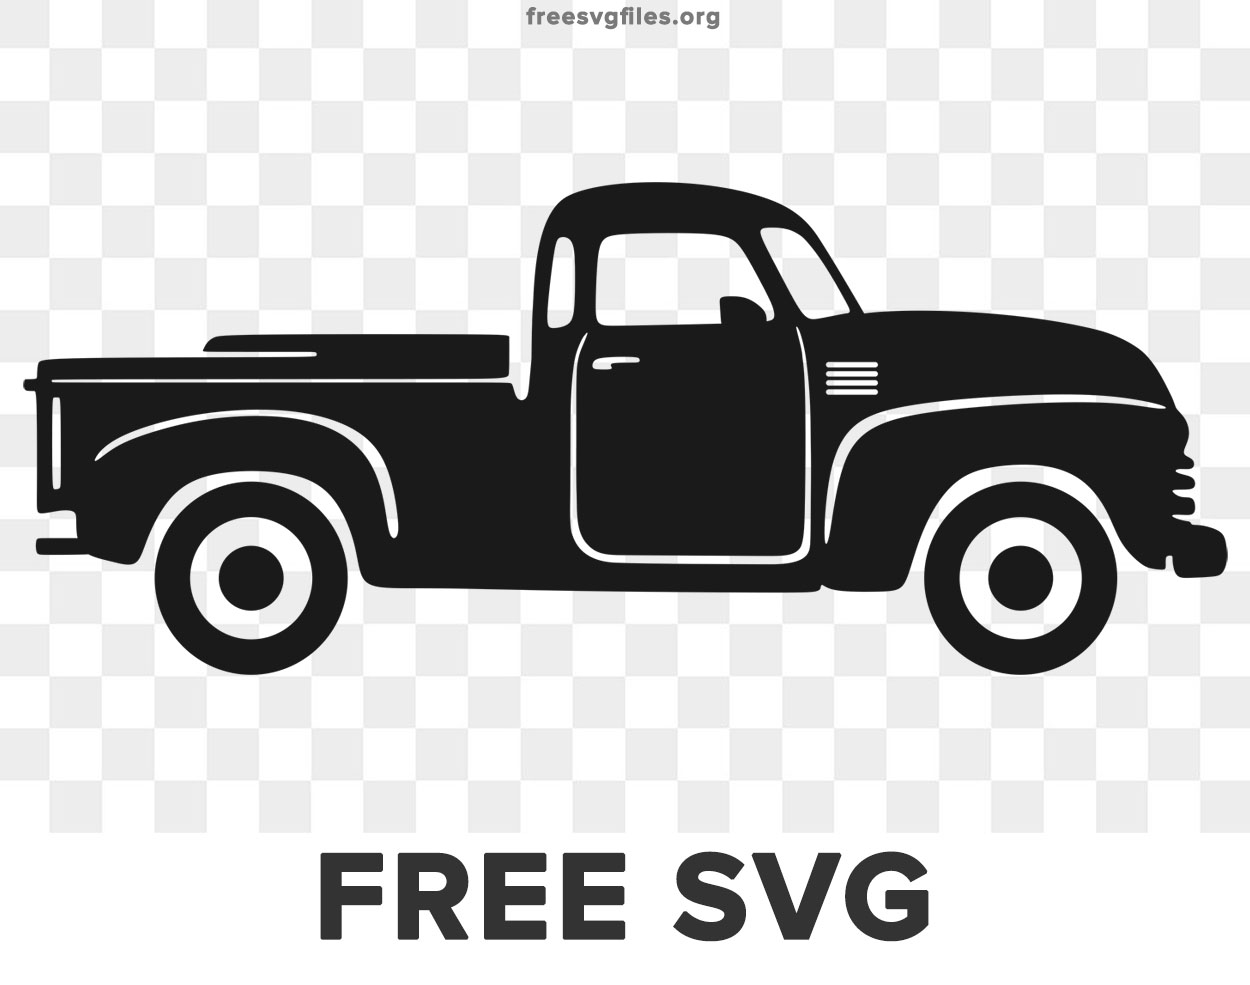 42 Old Truck Svg Cut Files Free Download Free Svg Cut - vrogue.co